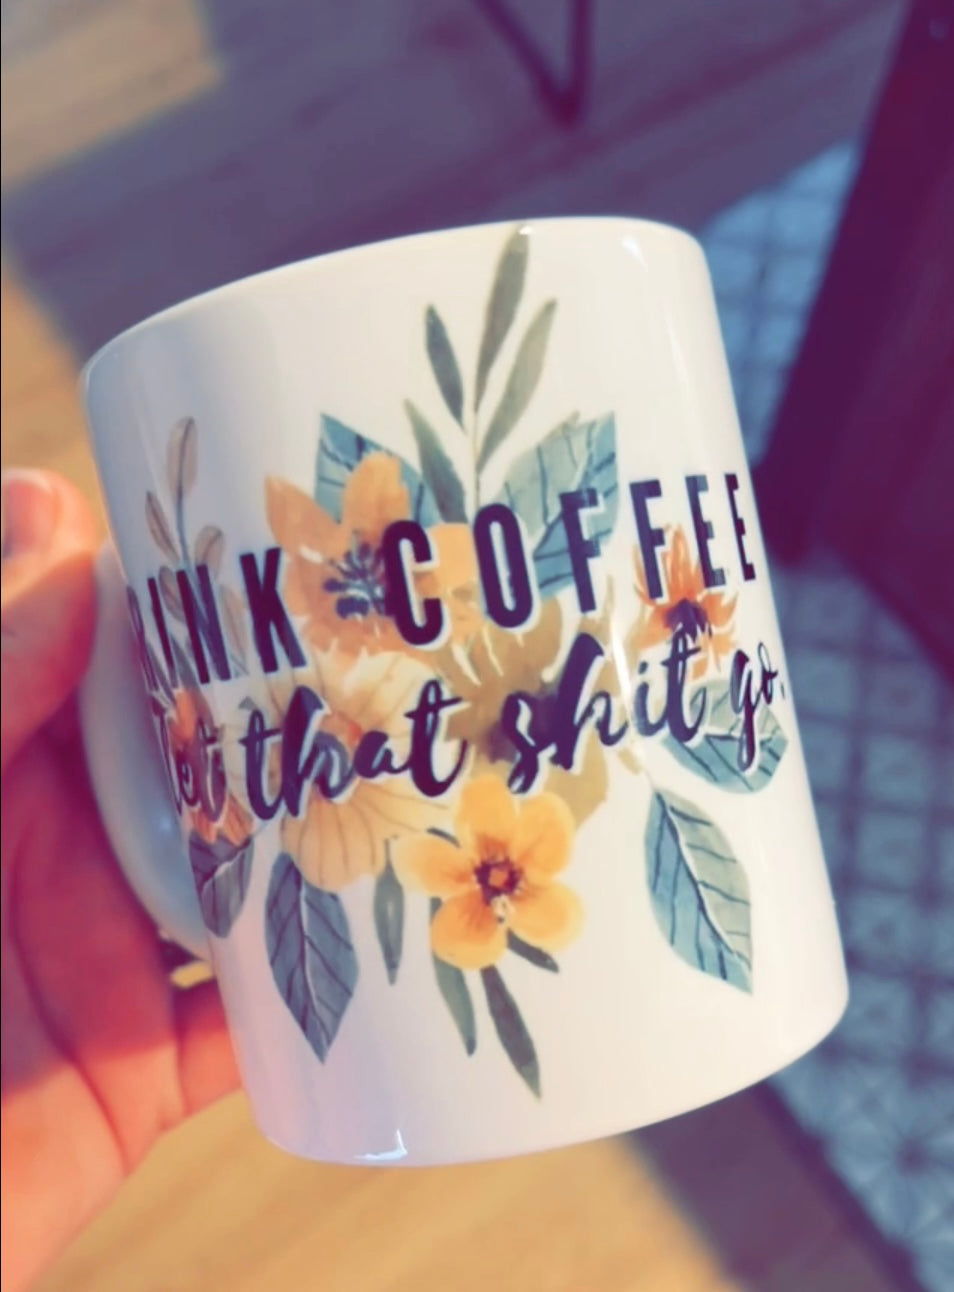 Drink Coffee, mug